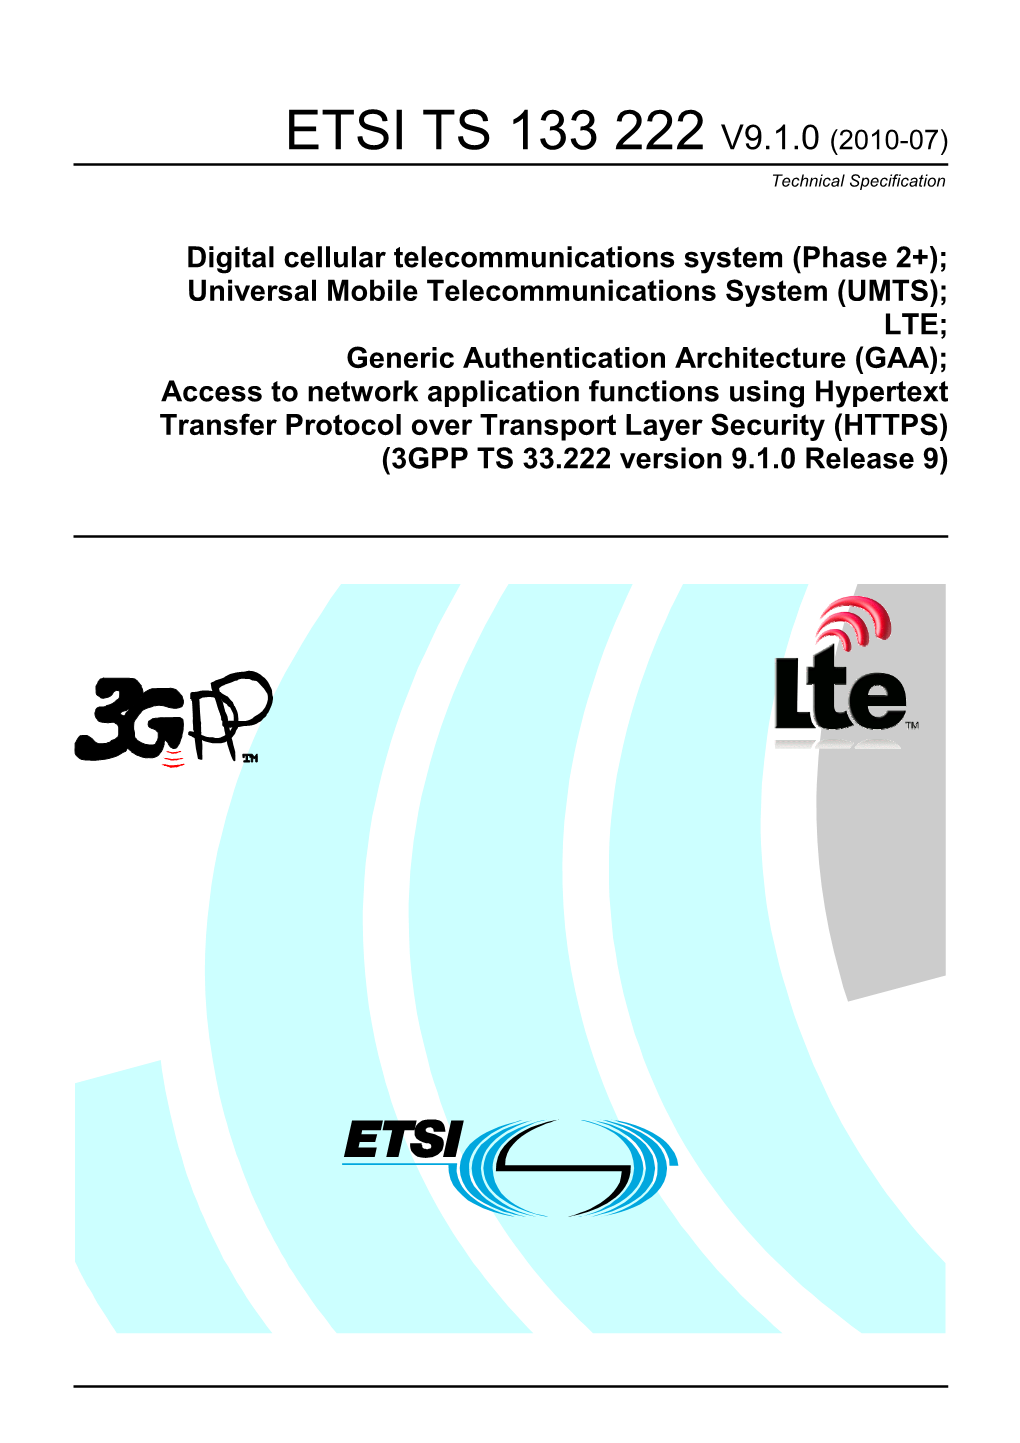 ETSI TS 133 222 V9.1.0 (2010-07) Technical Specification